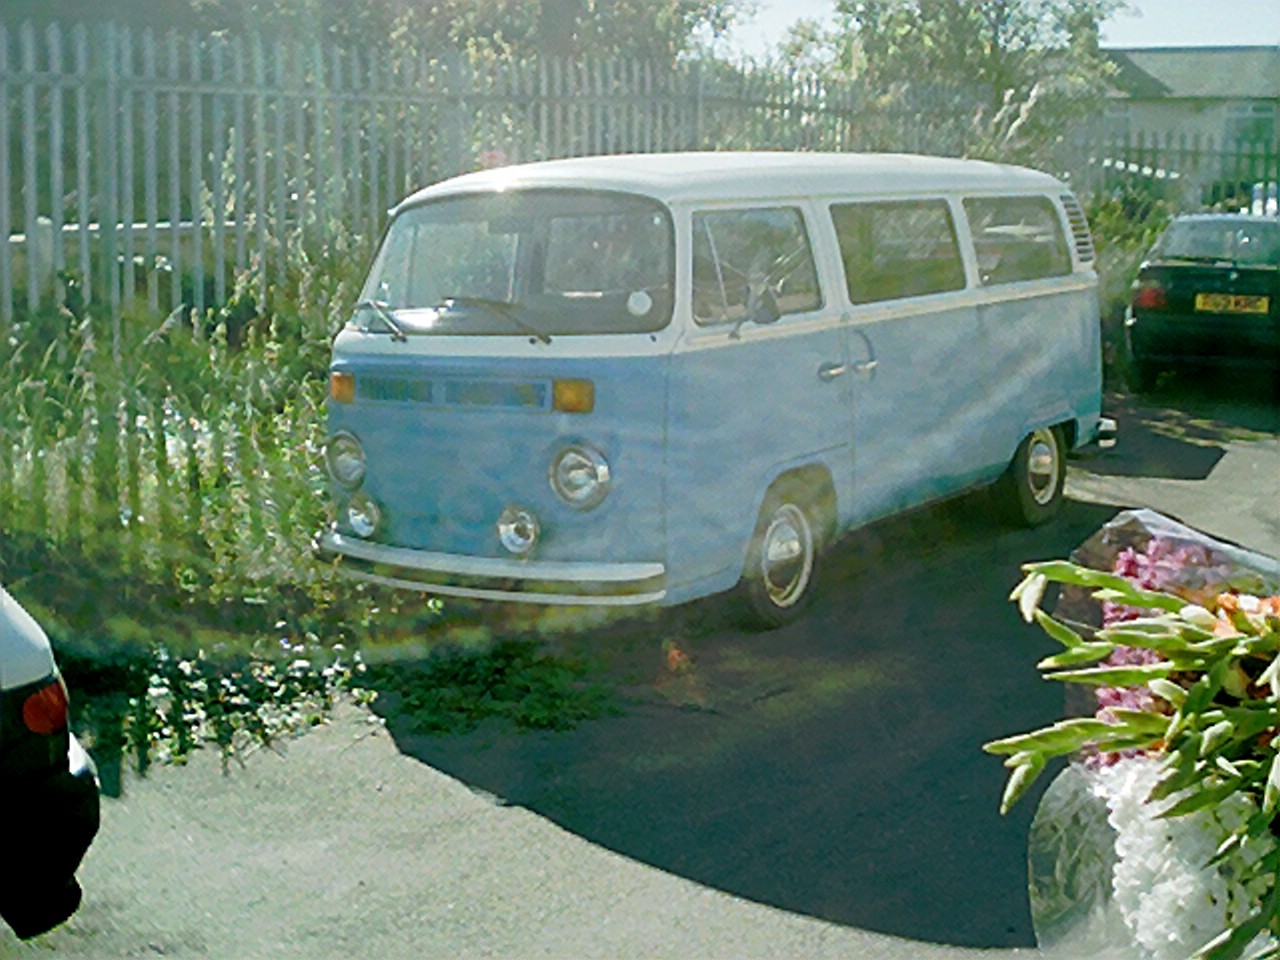 VW mini bus 1975 Sold 1,500